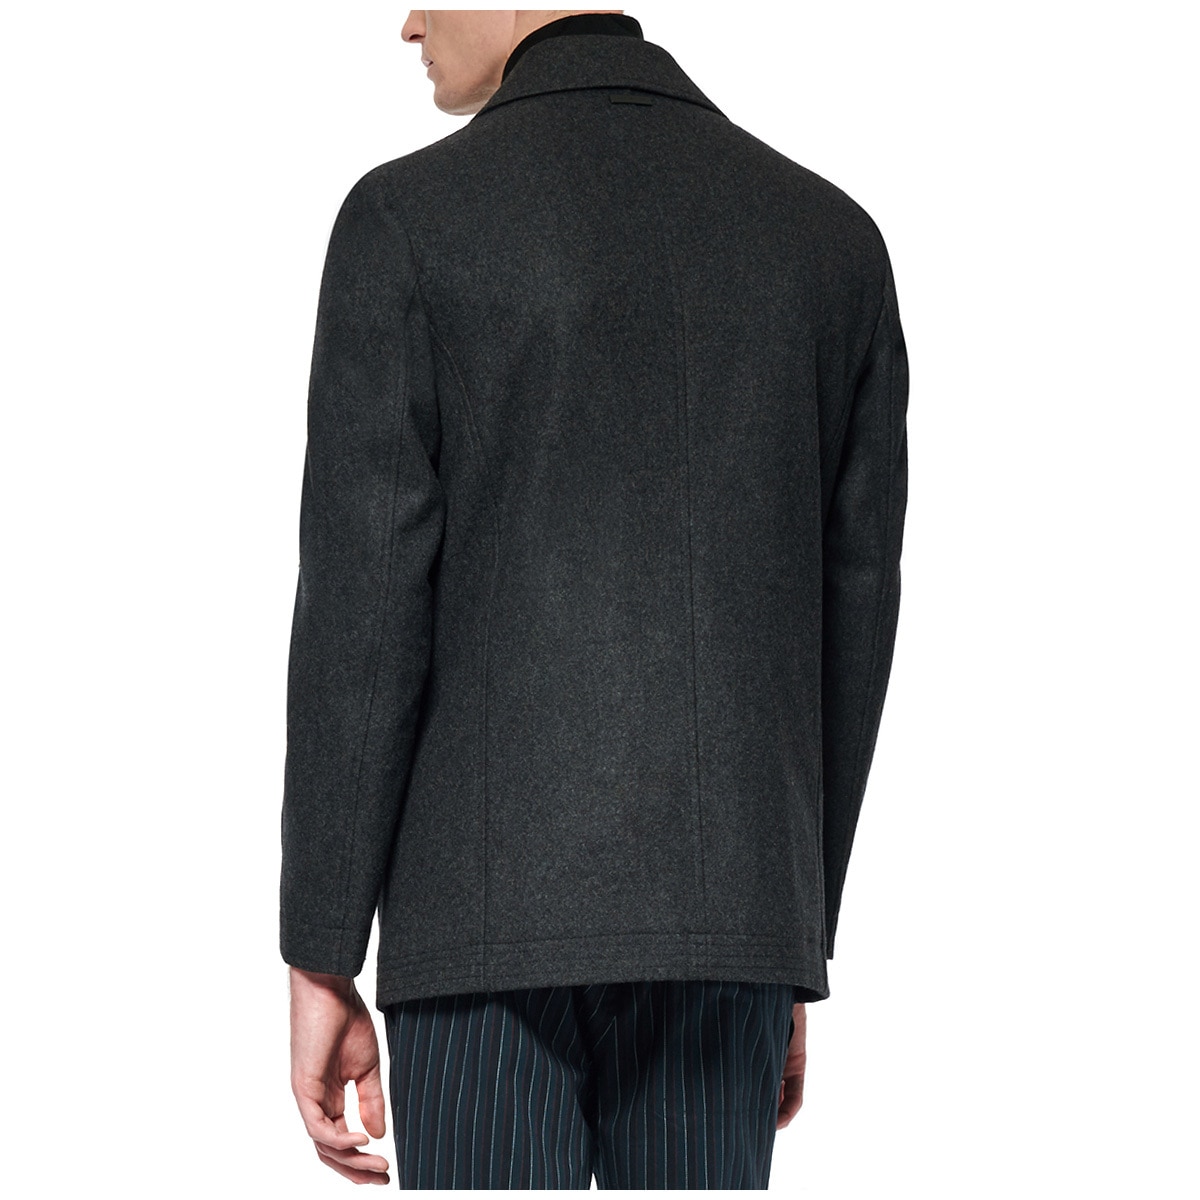 Andrew Marcs Wool Jacket - Charcoal